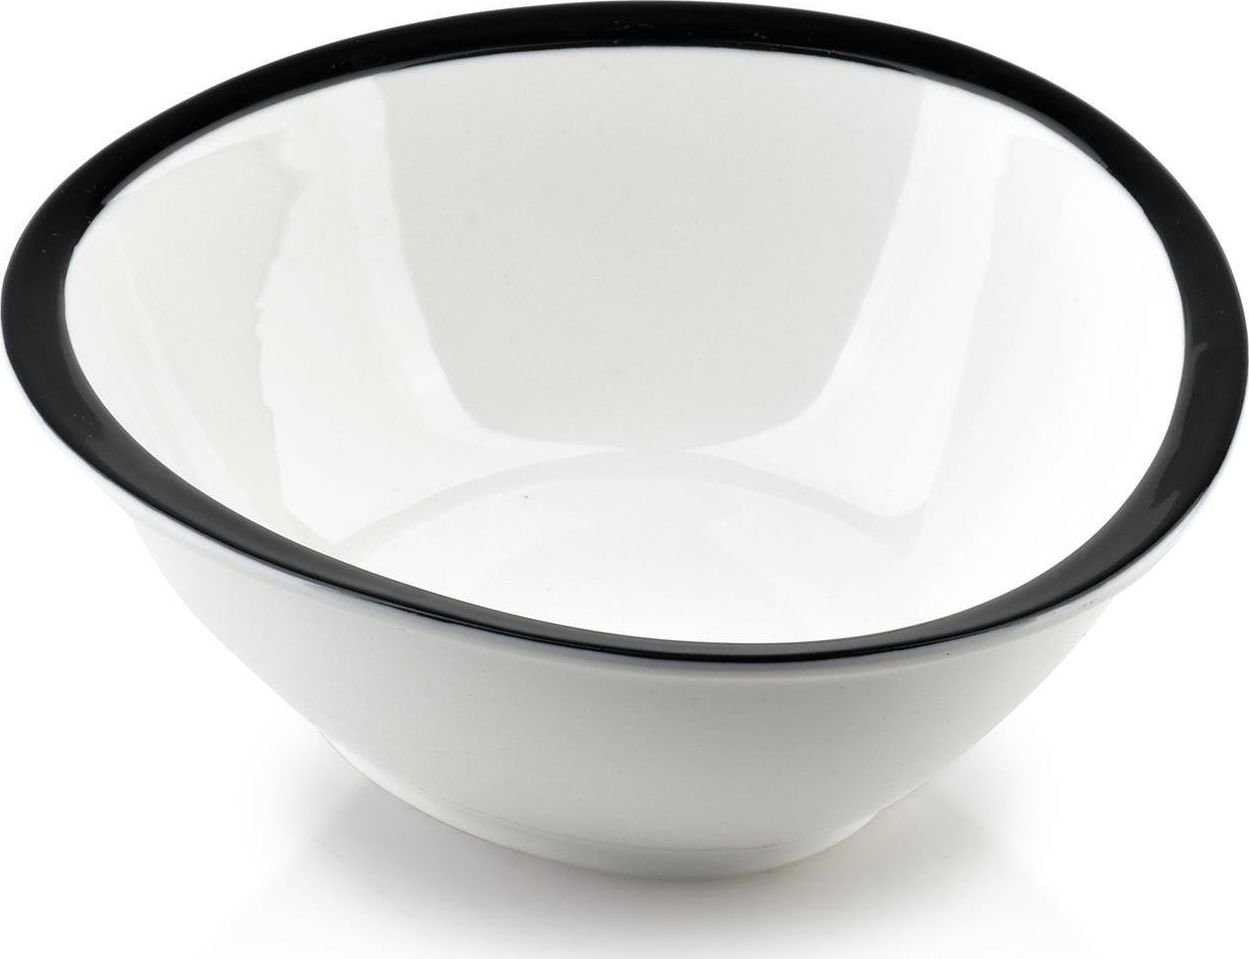 Boluri - Paulette bowl 15cm capacity 350ml